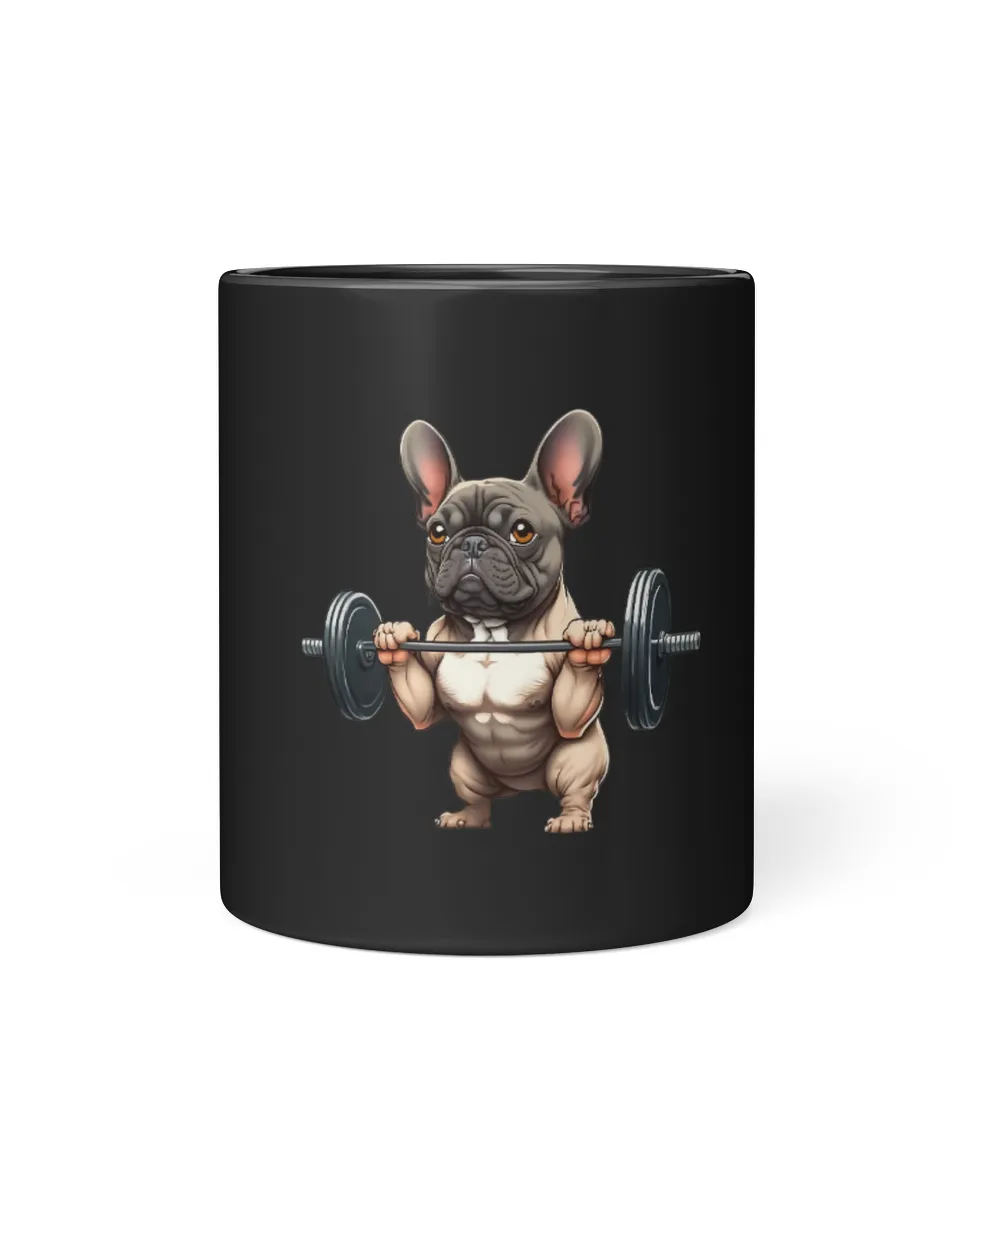 Funny French Bulldog Bodybuilding Gym Frenchie Weightlifter 1